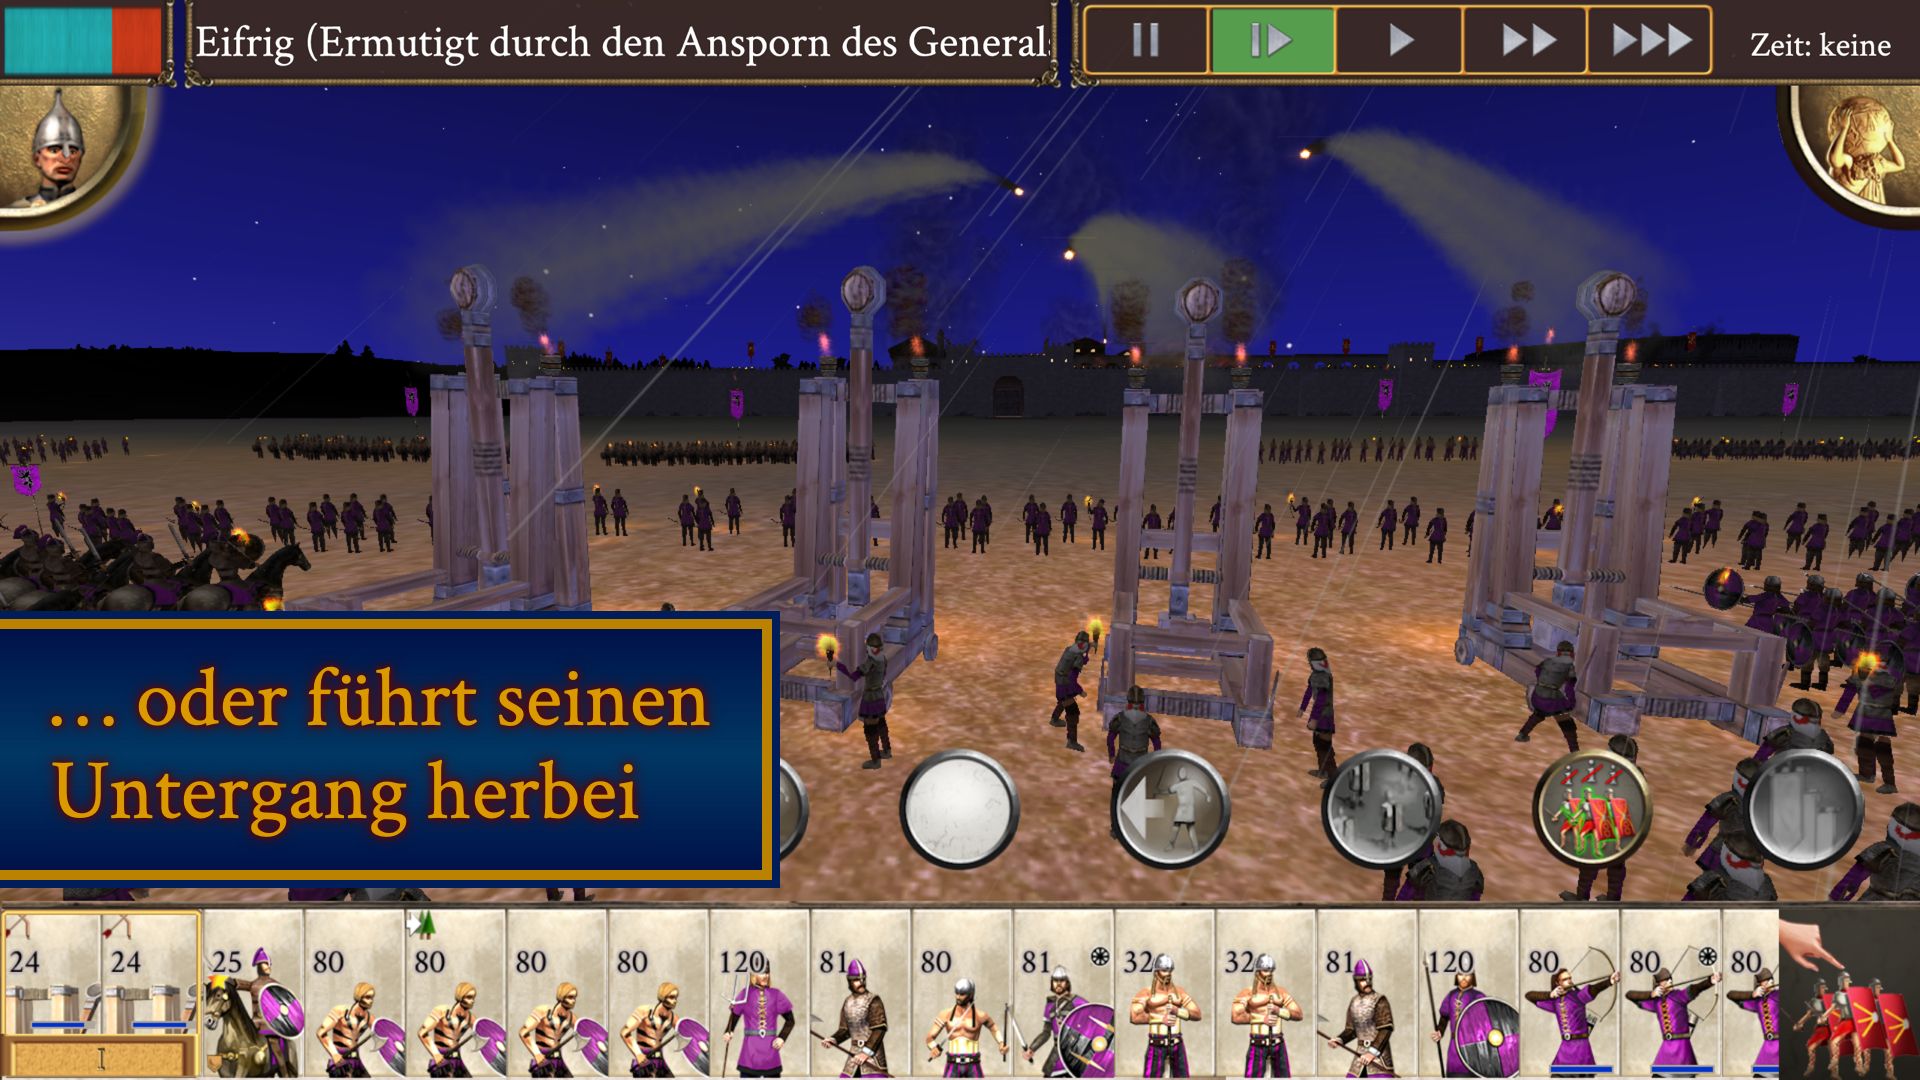 ROME: Total War - Barbarian Invasion screenshot 1